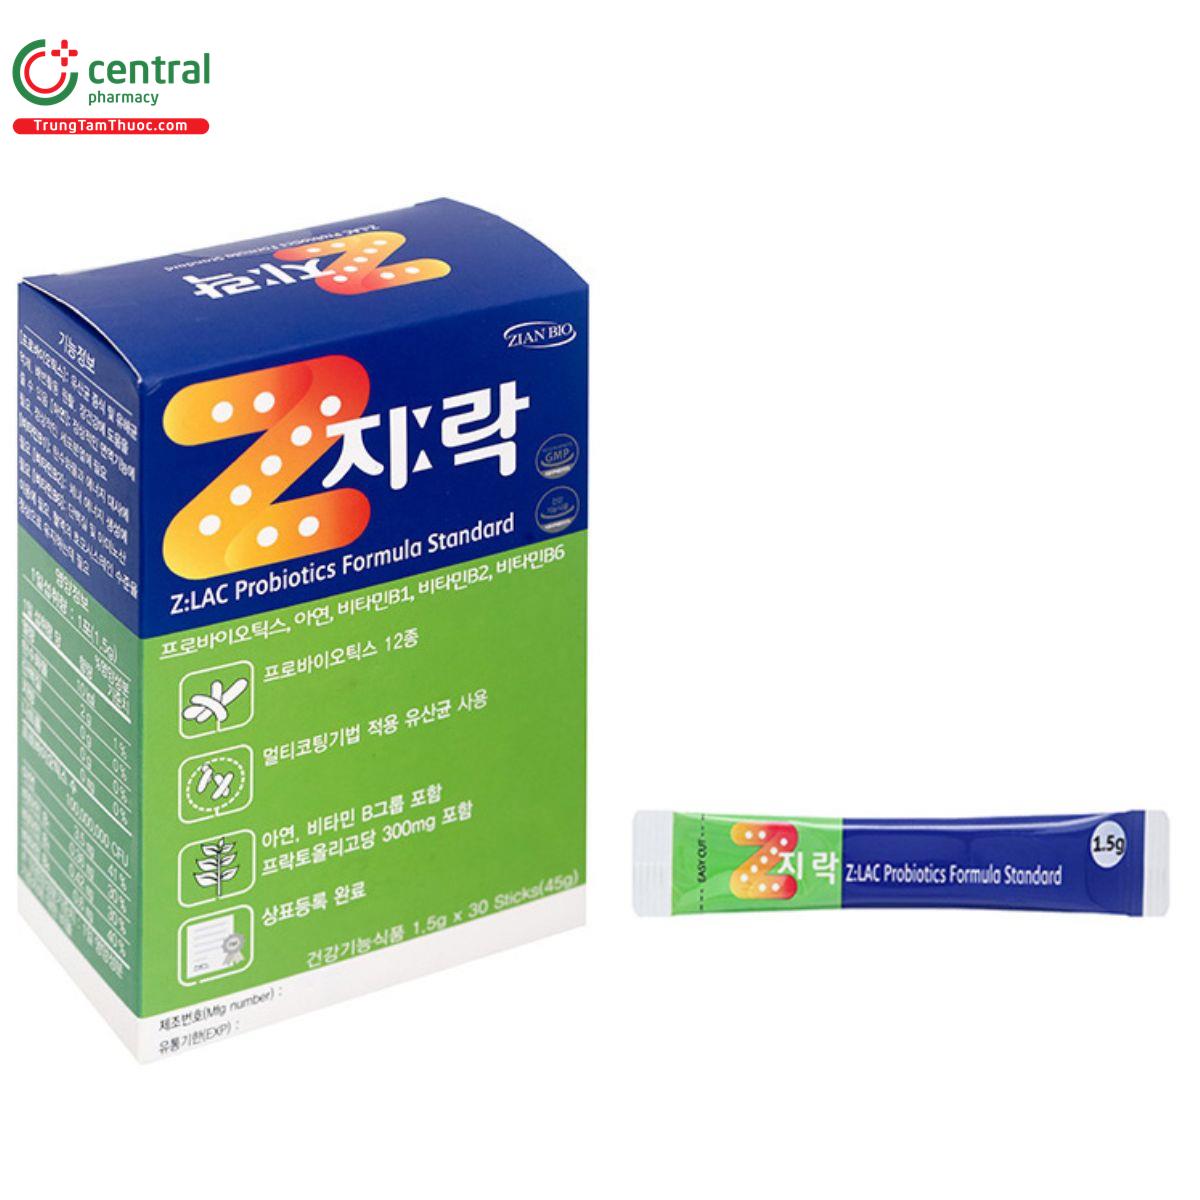 zlac probiotics formula standard 1 G2246